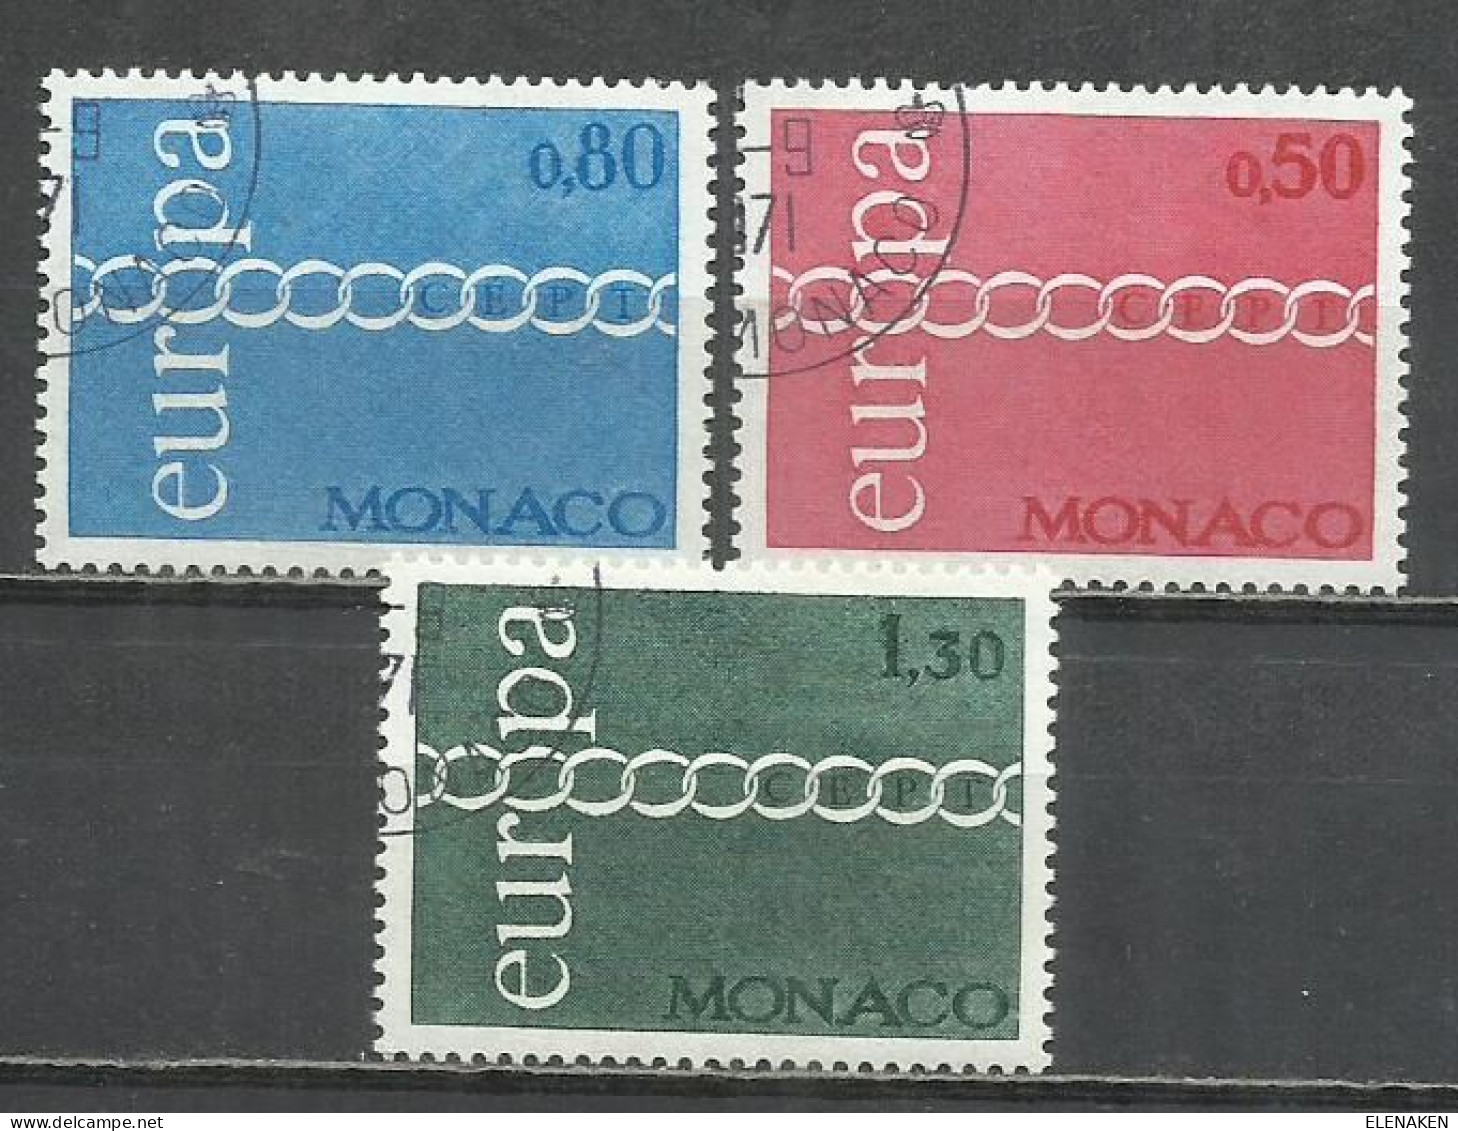 8527R-SELLOS SERIE COMPLETA MÓNACO 1971 EUROPA Nº863/865 .BONITOS - Used Stamps